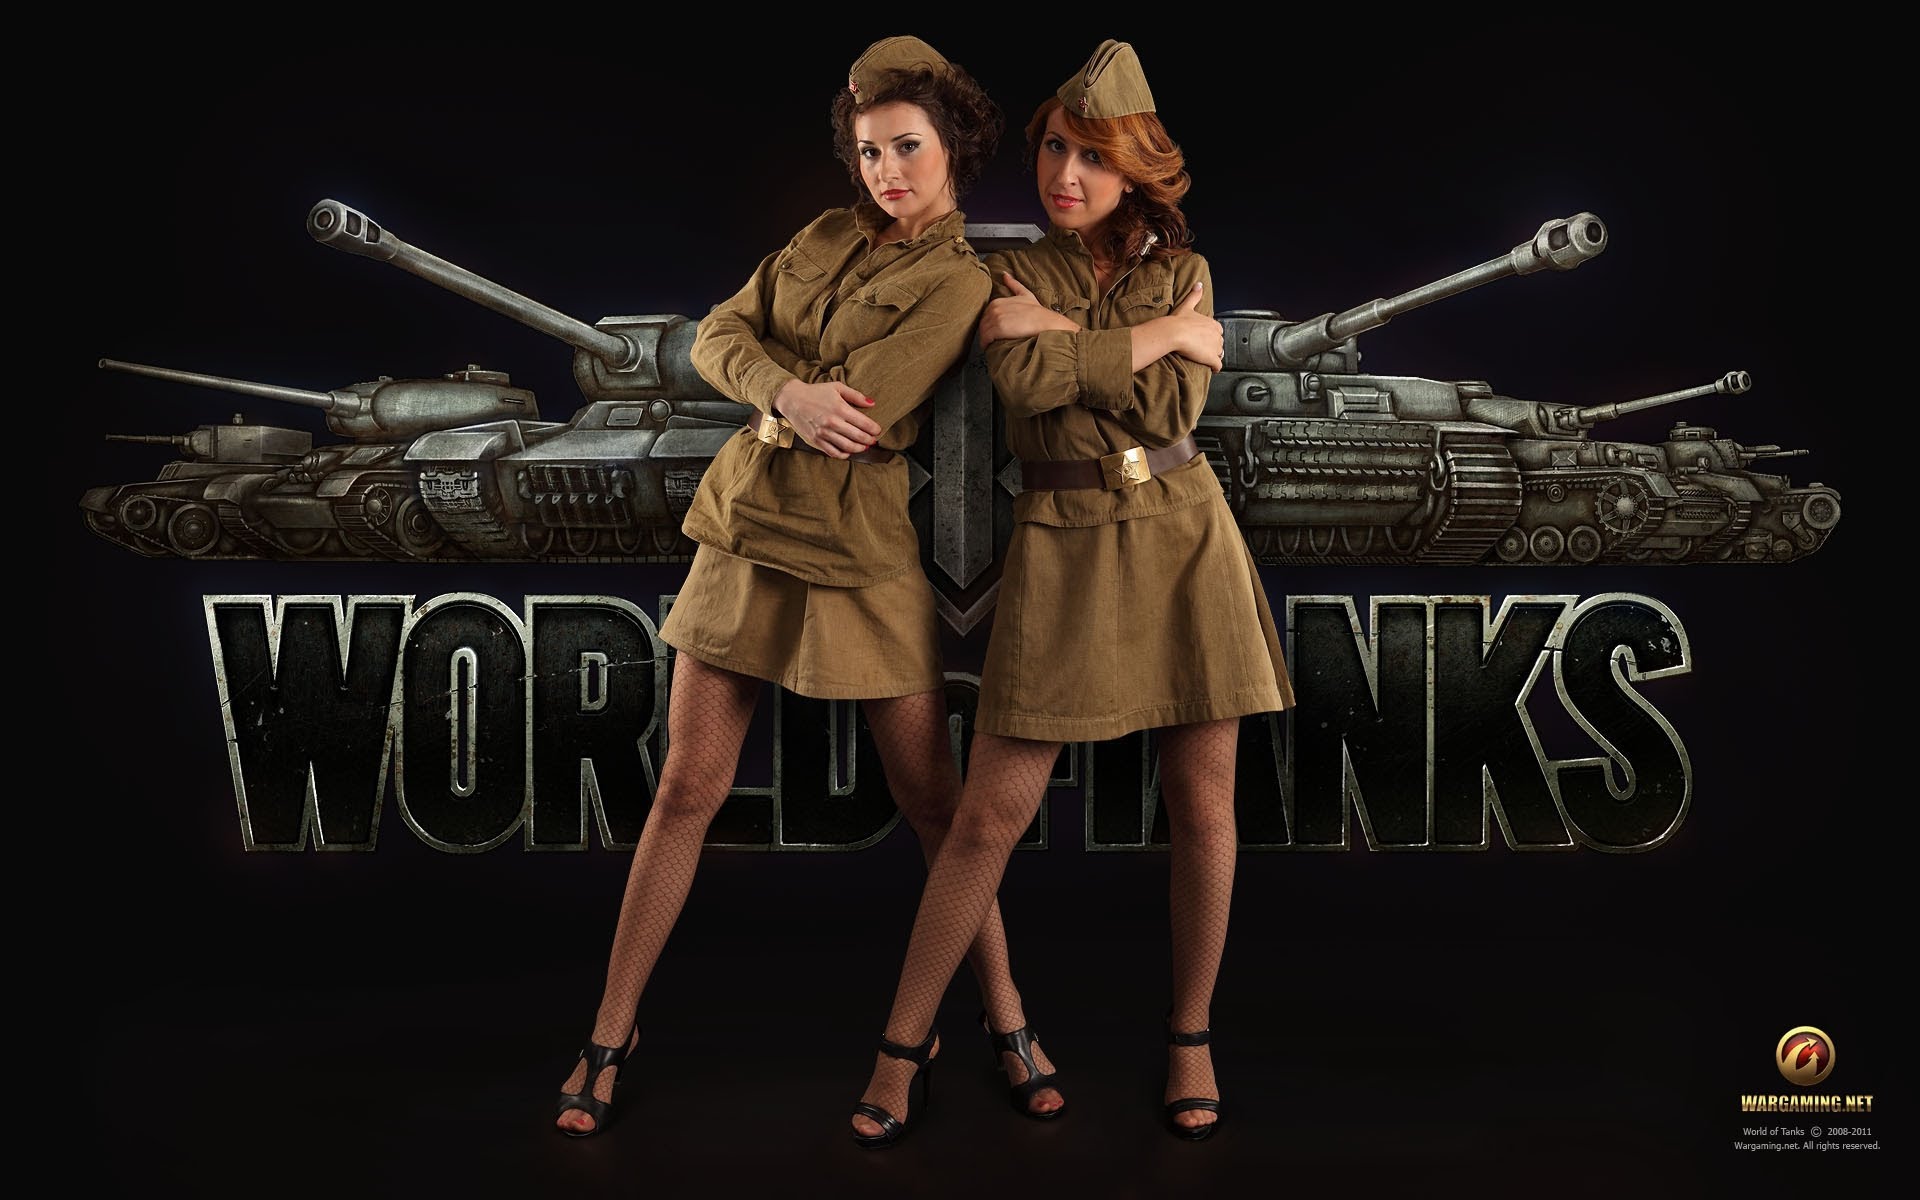 world of tanks, video game Free Stock Photo